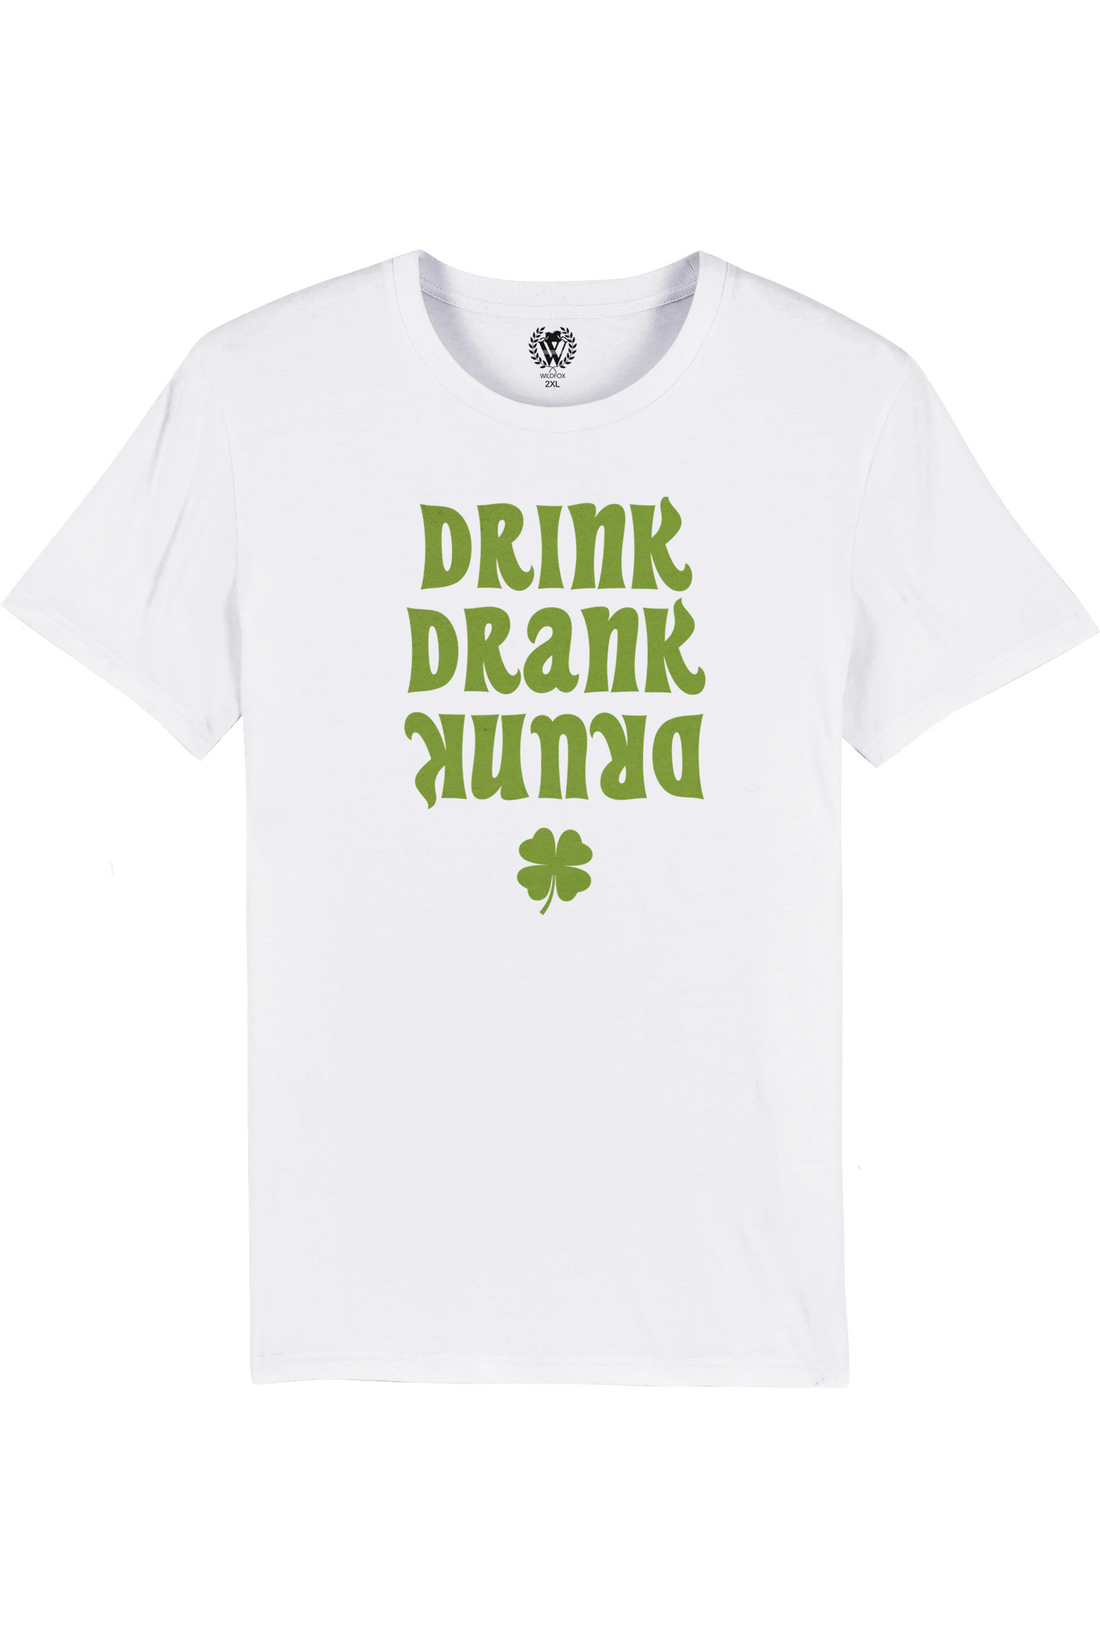 Drink Drank Drunk | Organic White